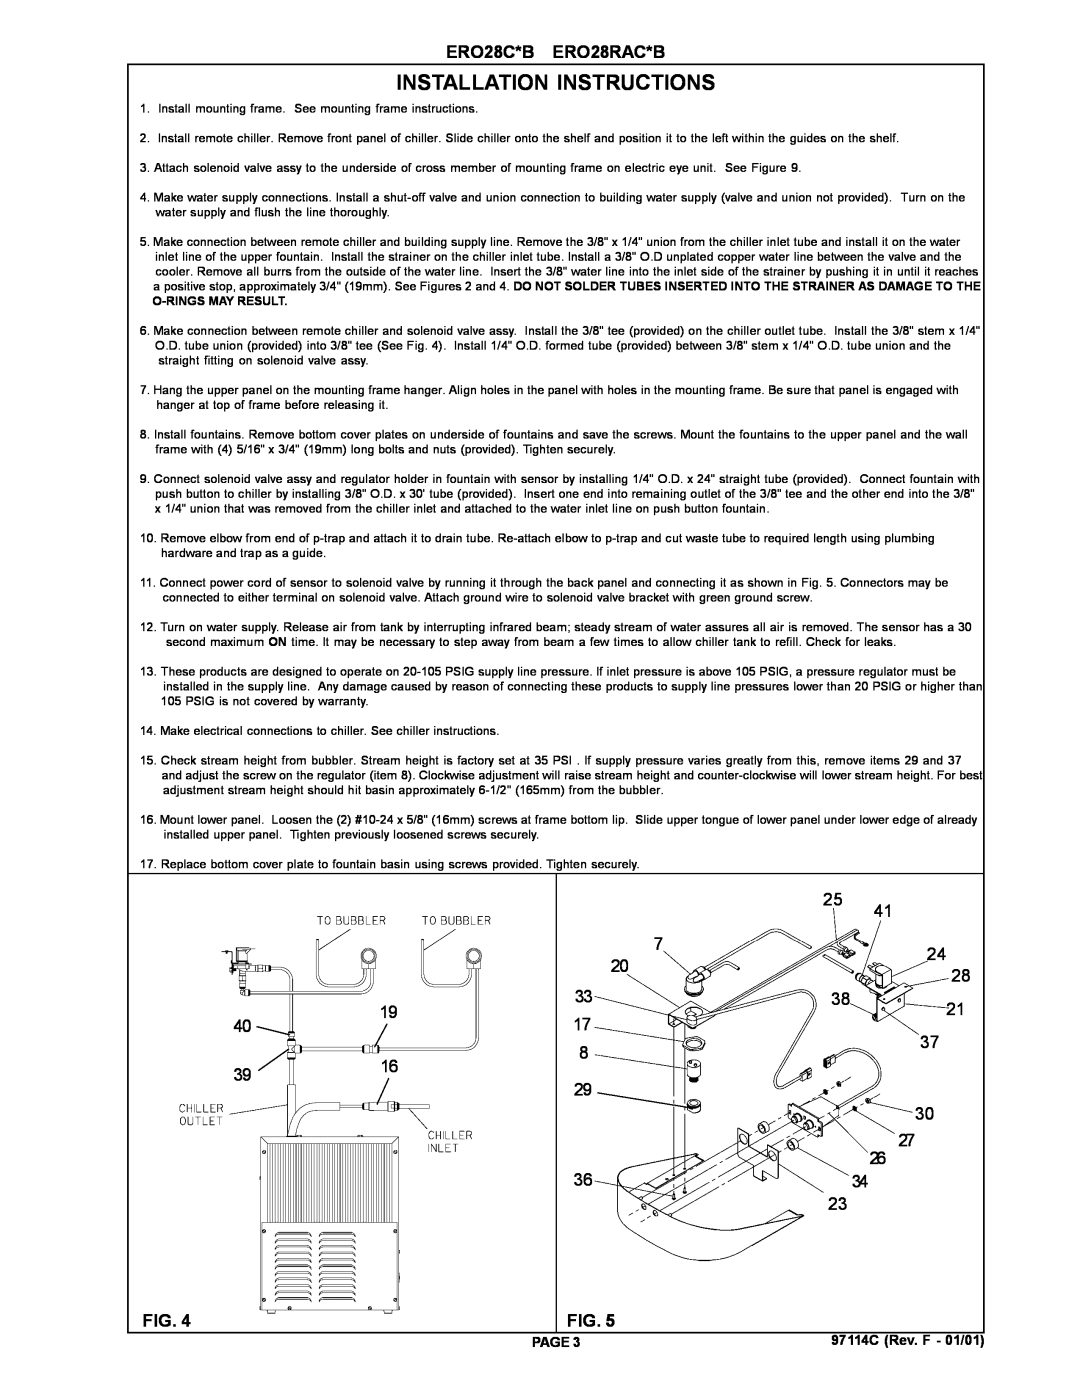 Elkay manual Installation Instructions, ERO28C*B ERO28RAC*B, Page 